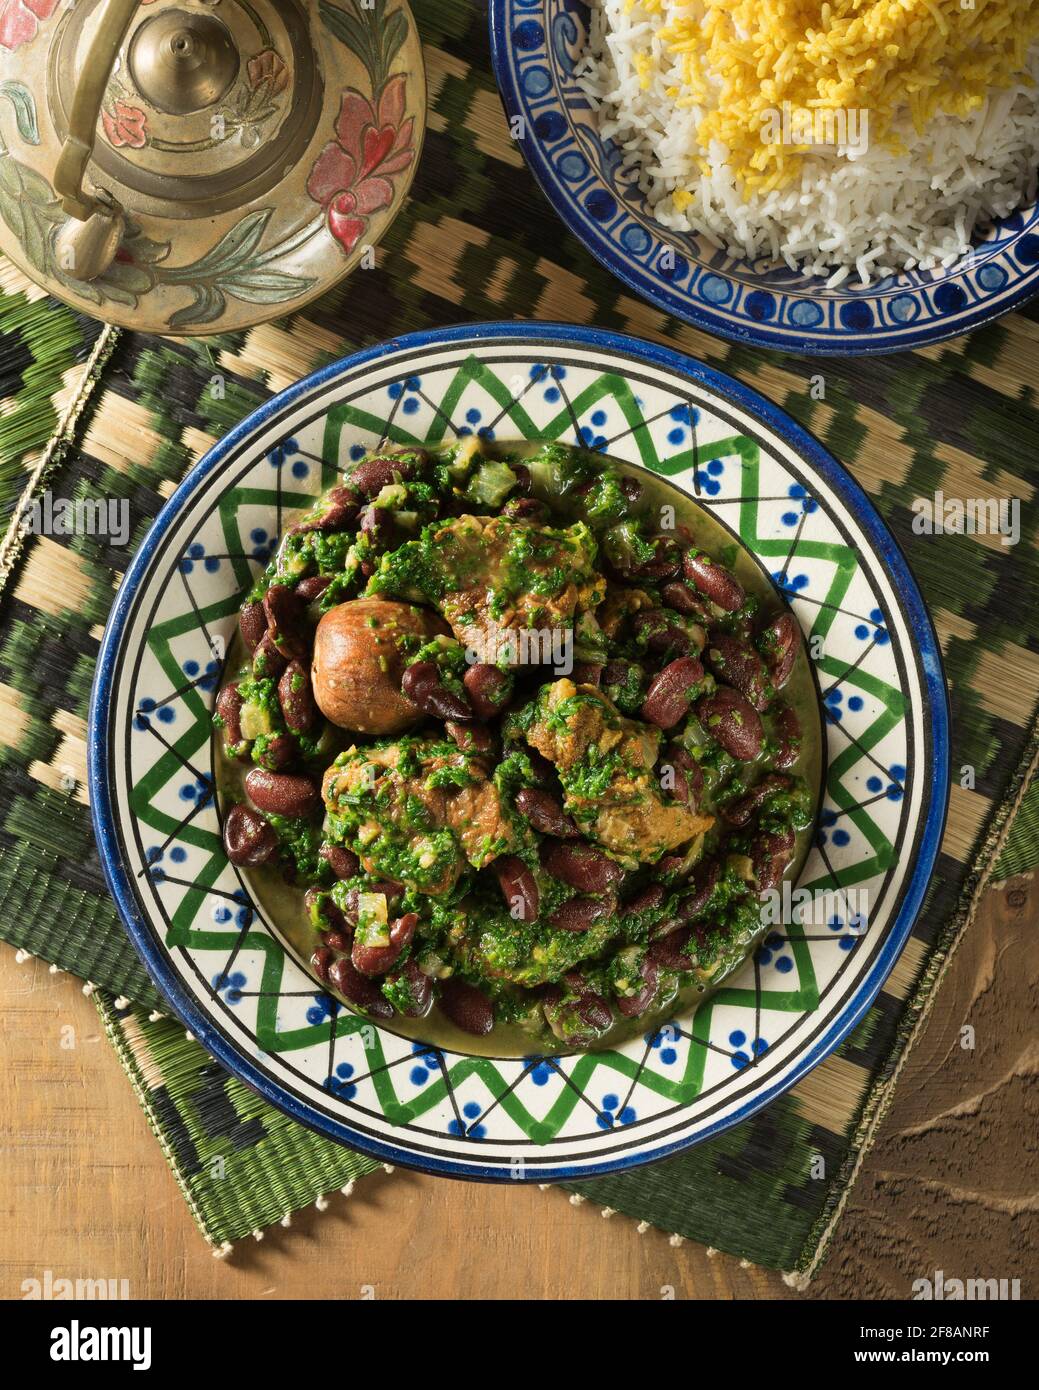 Khoresh ghormeh sabzi. Iranian lamb and herb stew. Iran Food Stock Photo